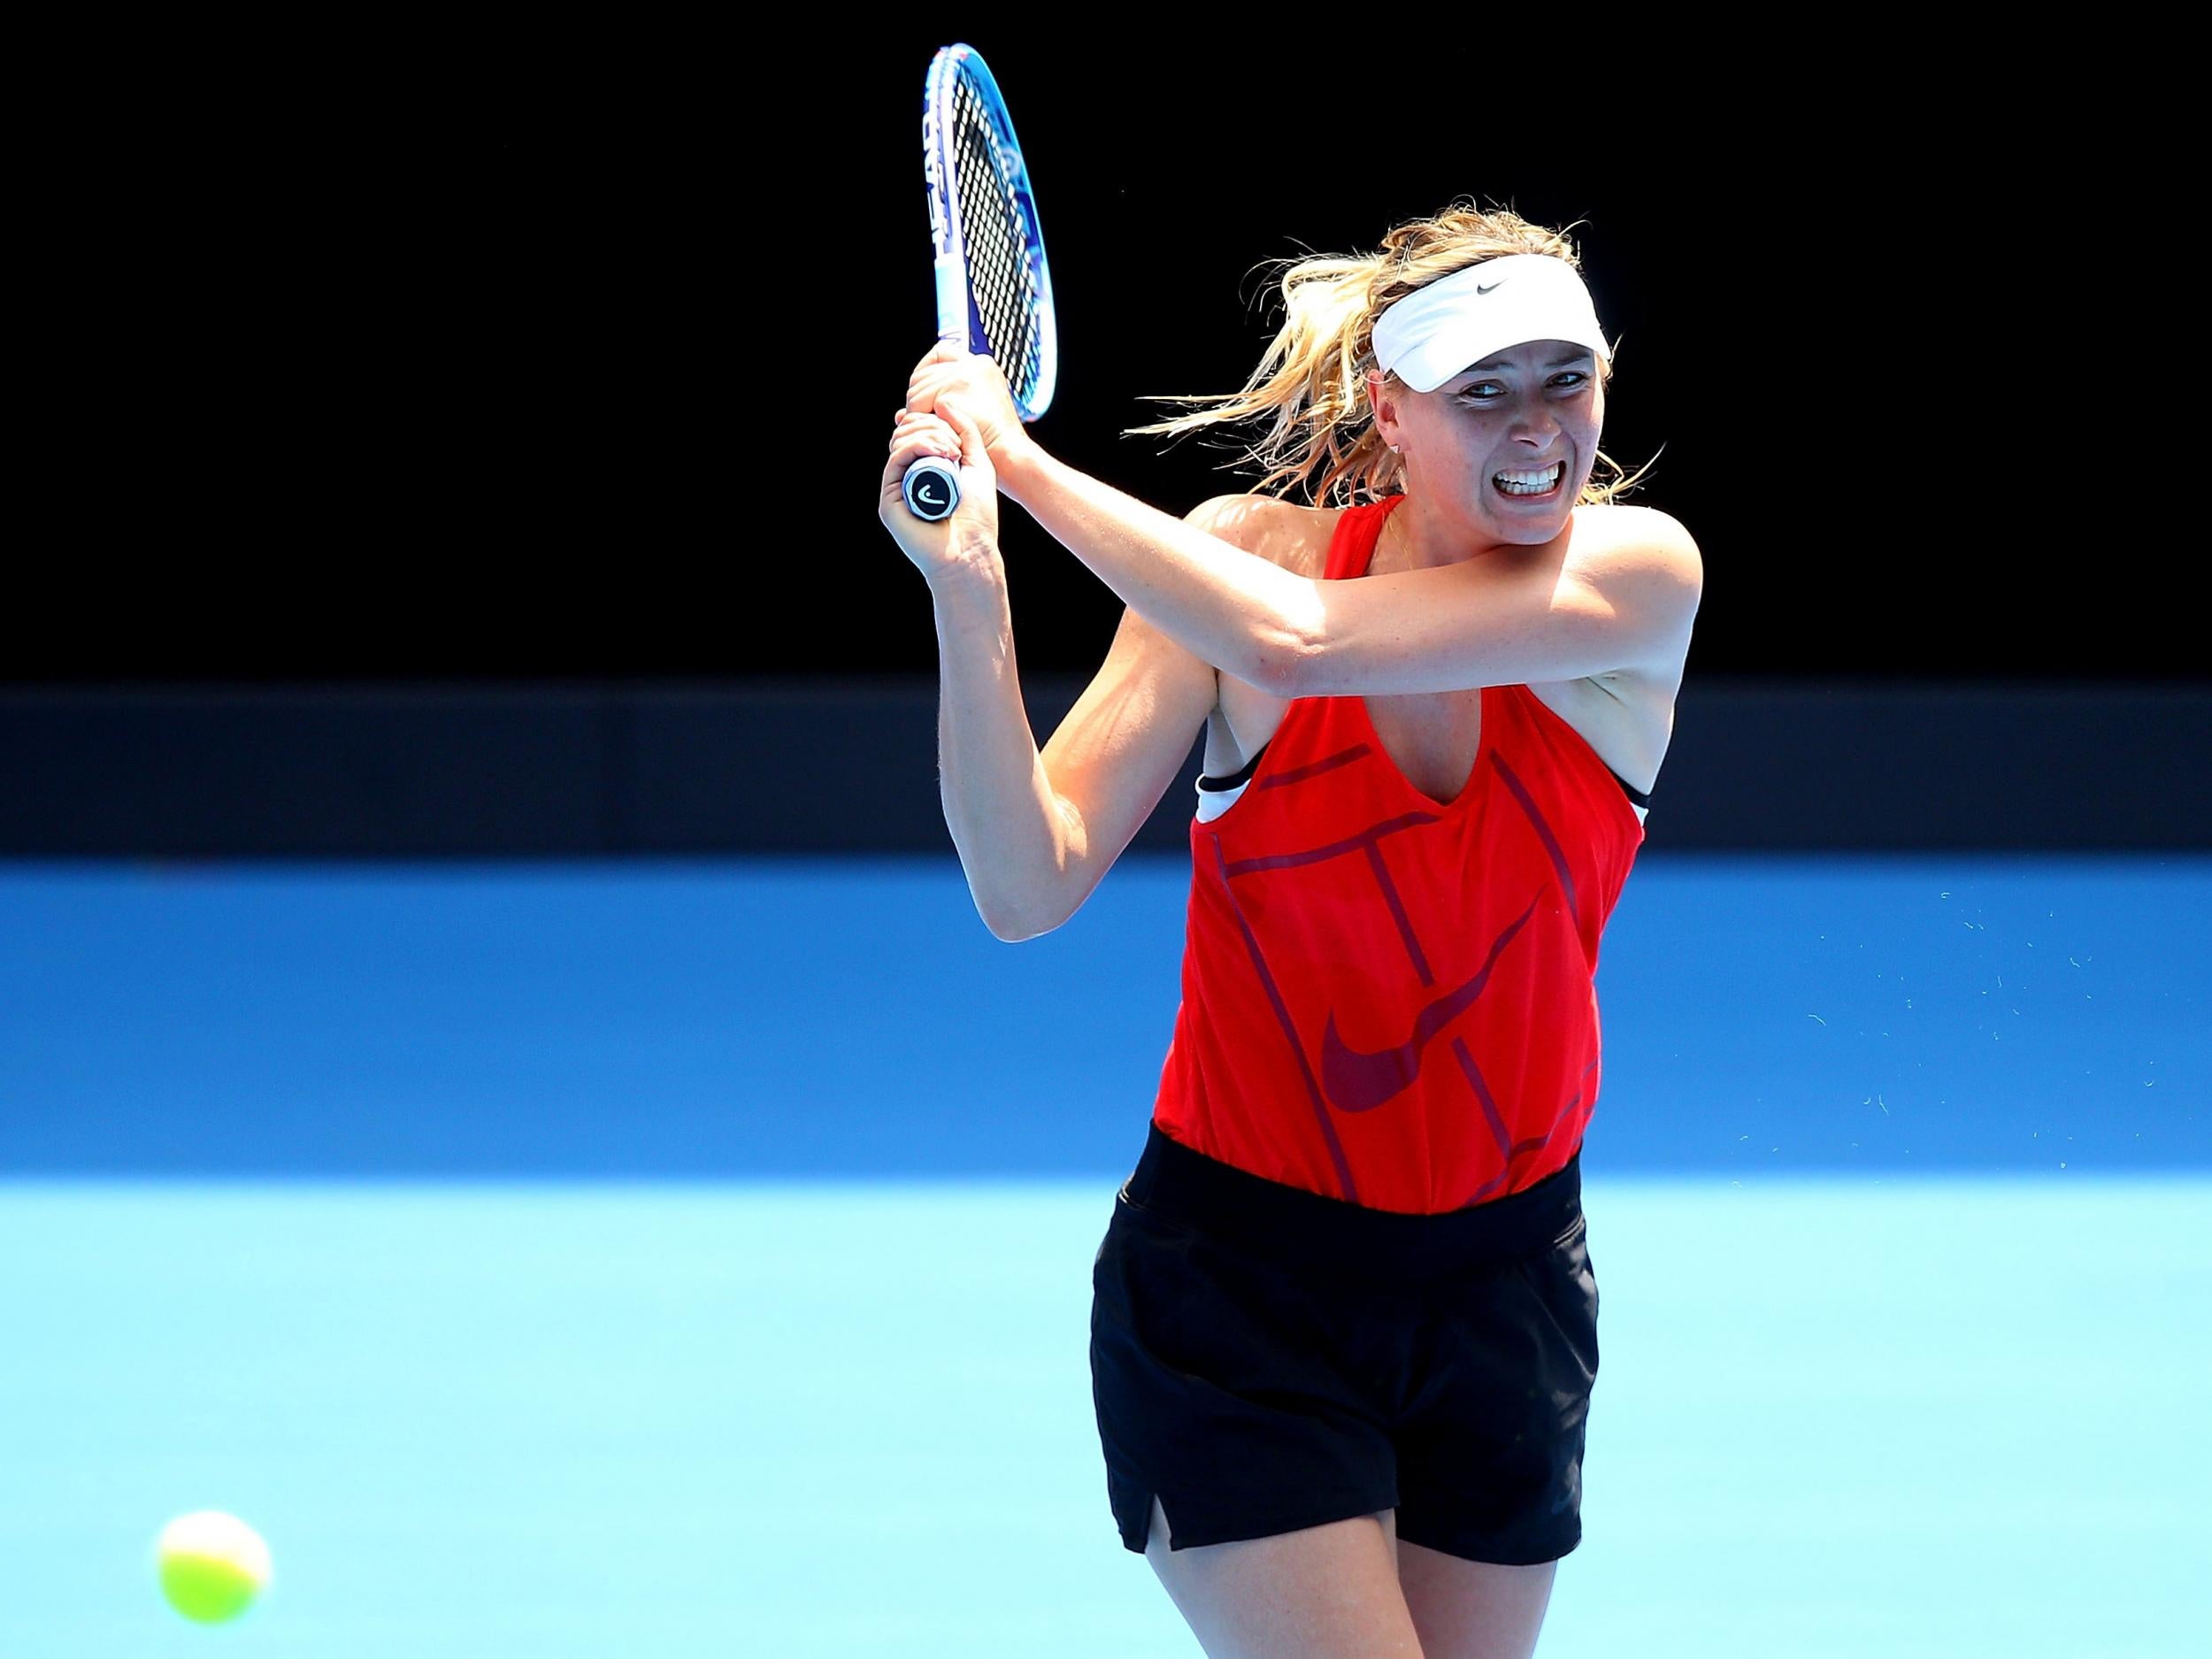 Sharapova's impending return to the Tour has proven controversial